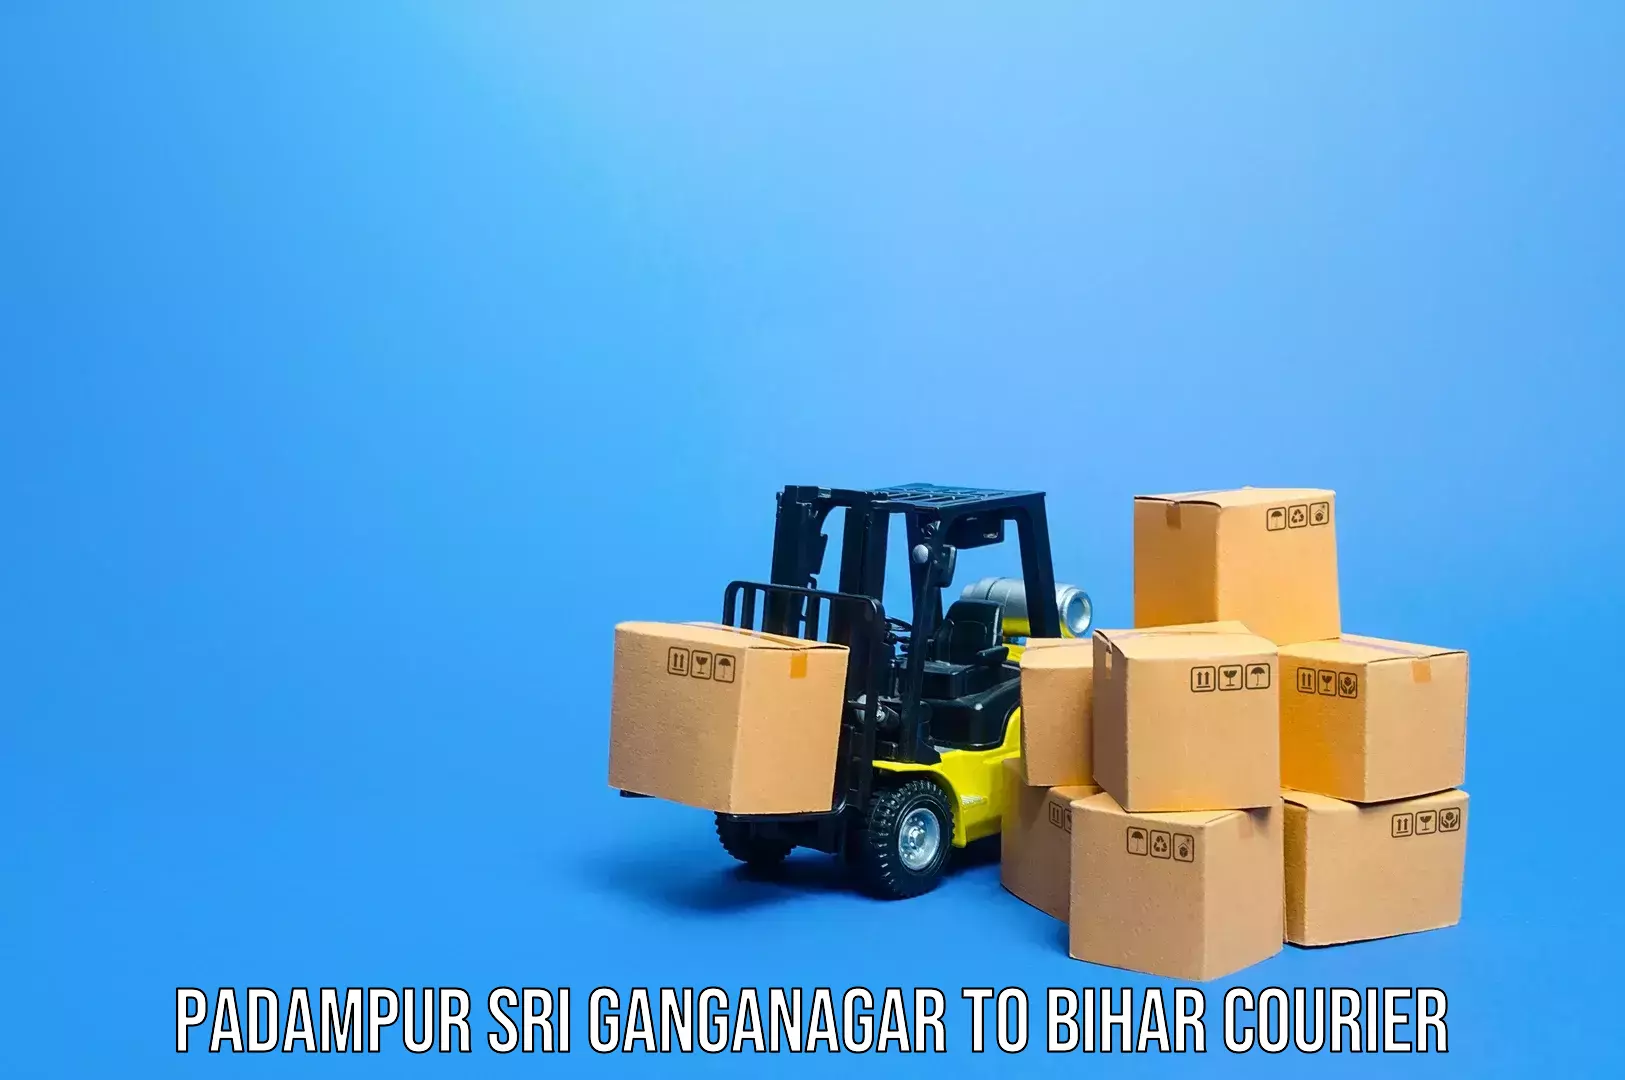 Baggage shipping experts Padampur Sri Ganganagar to Bihar